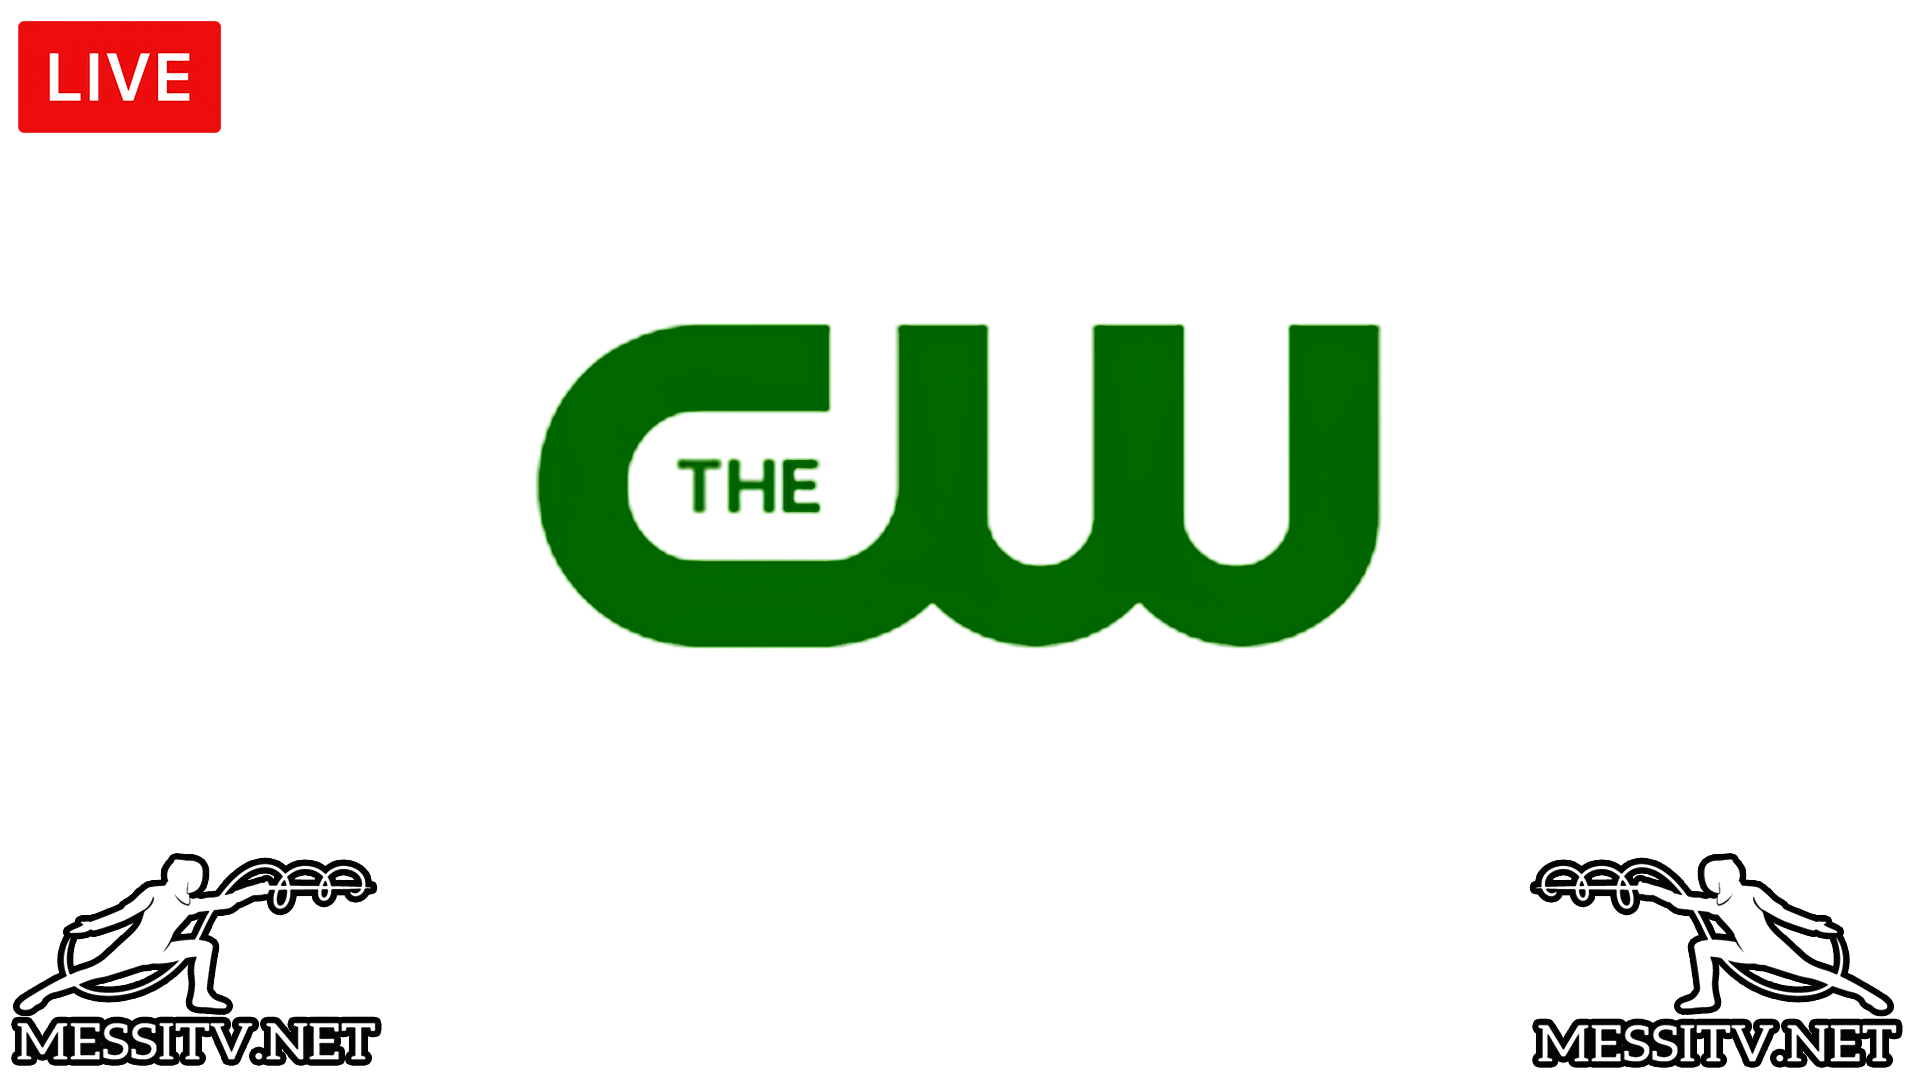 Watch THE CW TV live stream online, Watch UK TV Live online, Watch USA TV Live Online